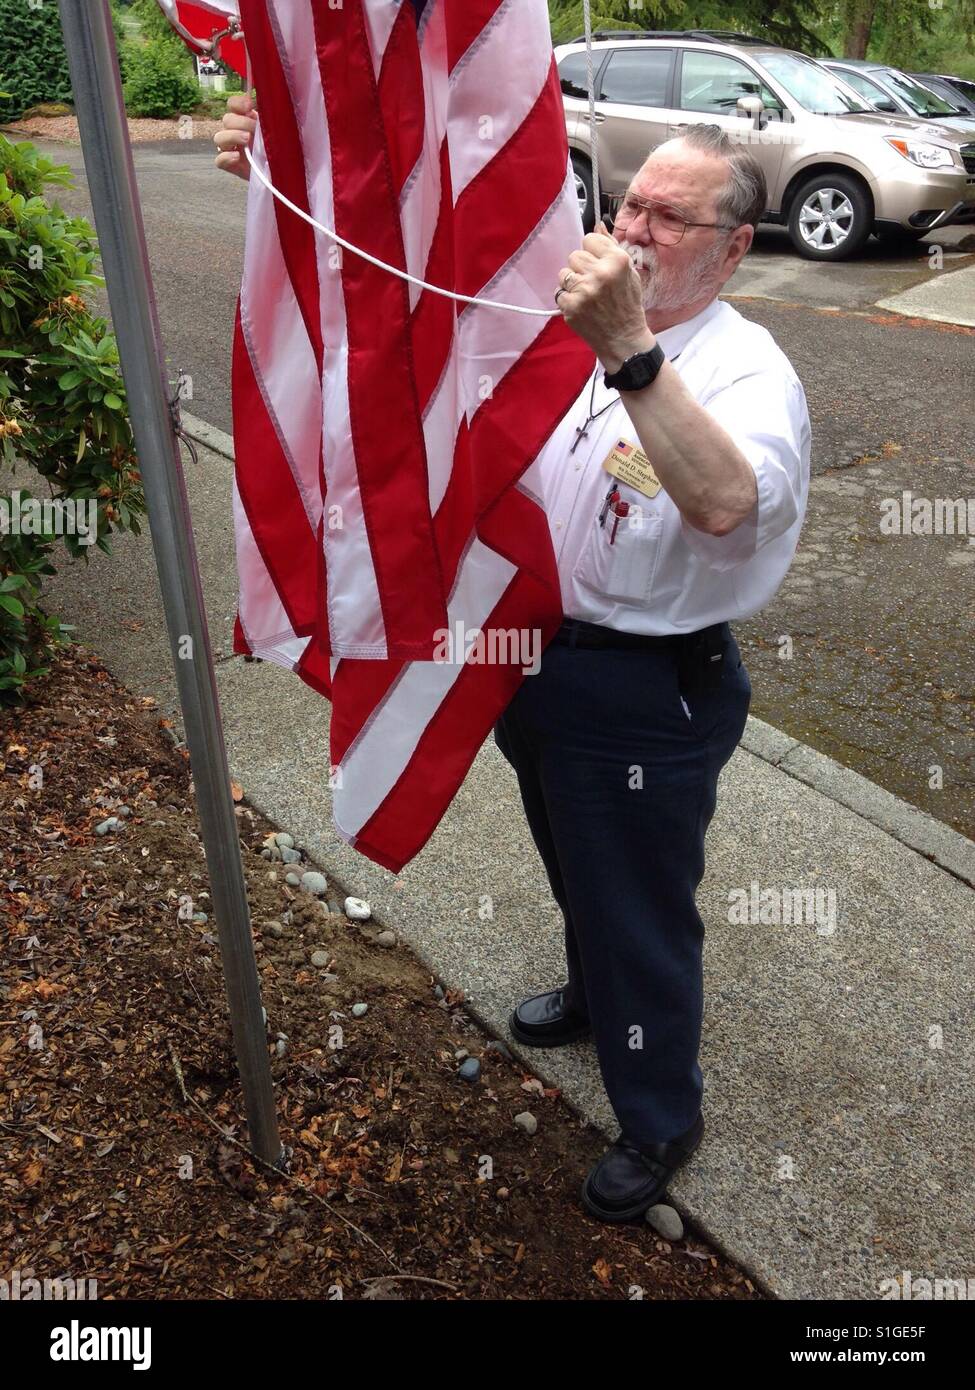 Veteran arranging the flag for raising Stock Photo